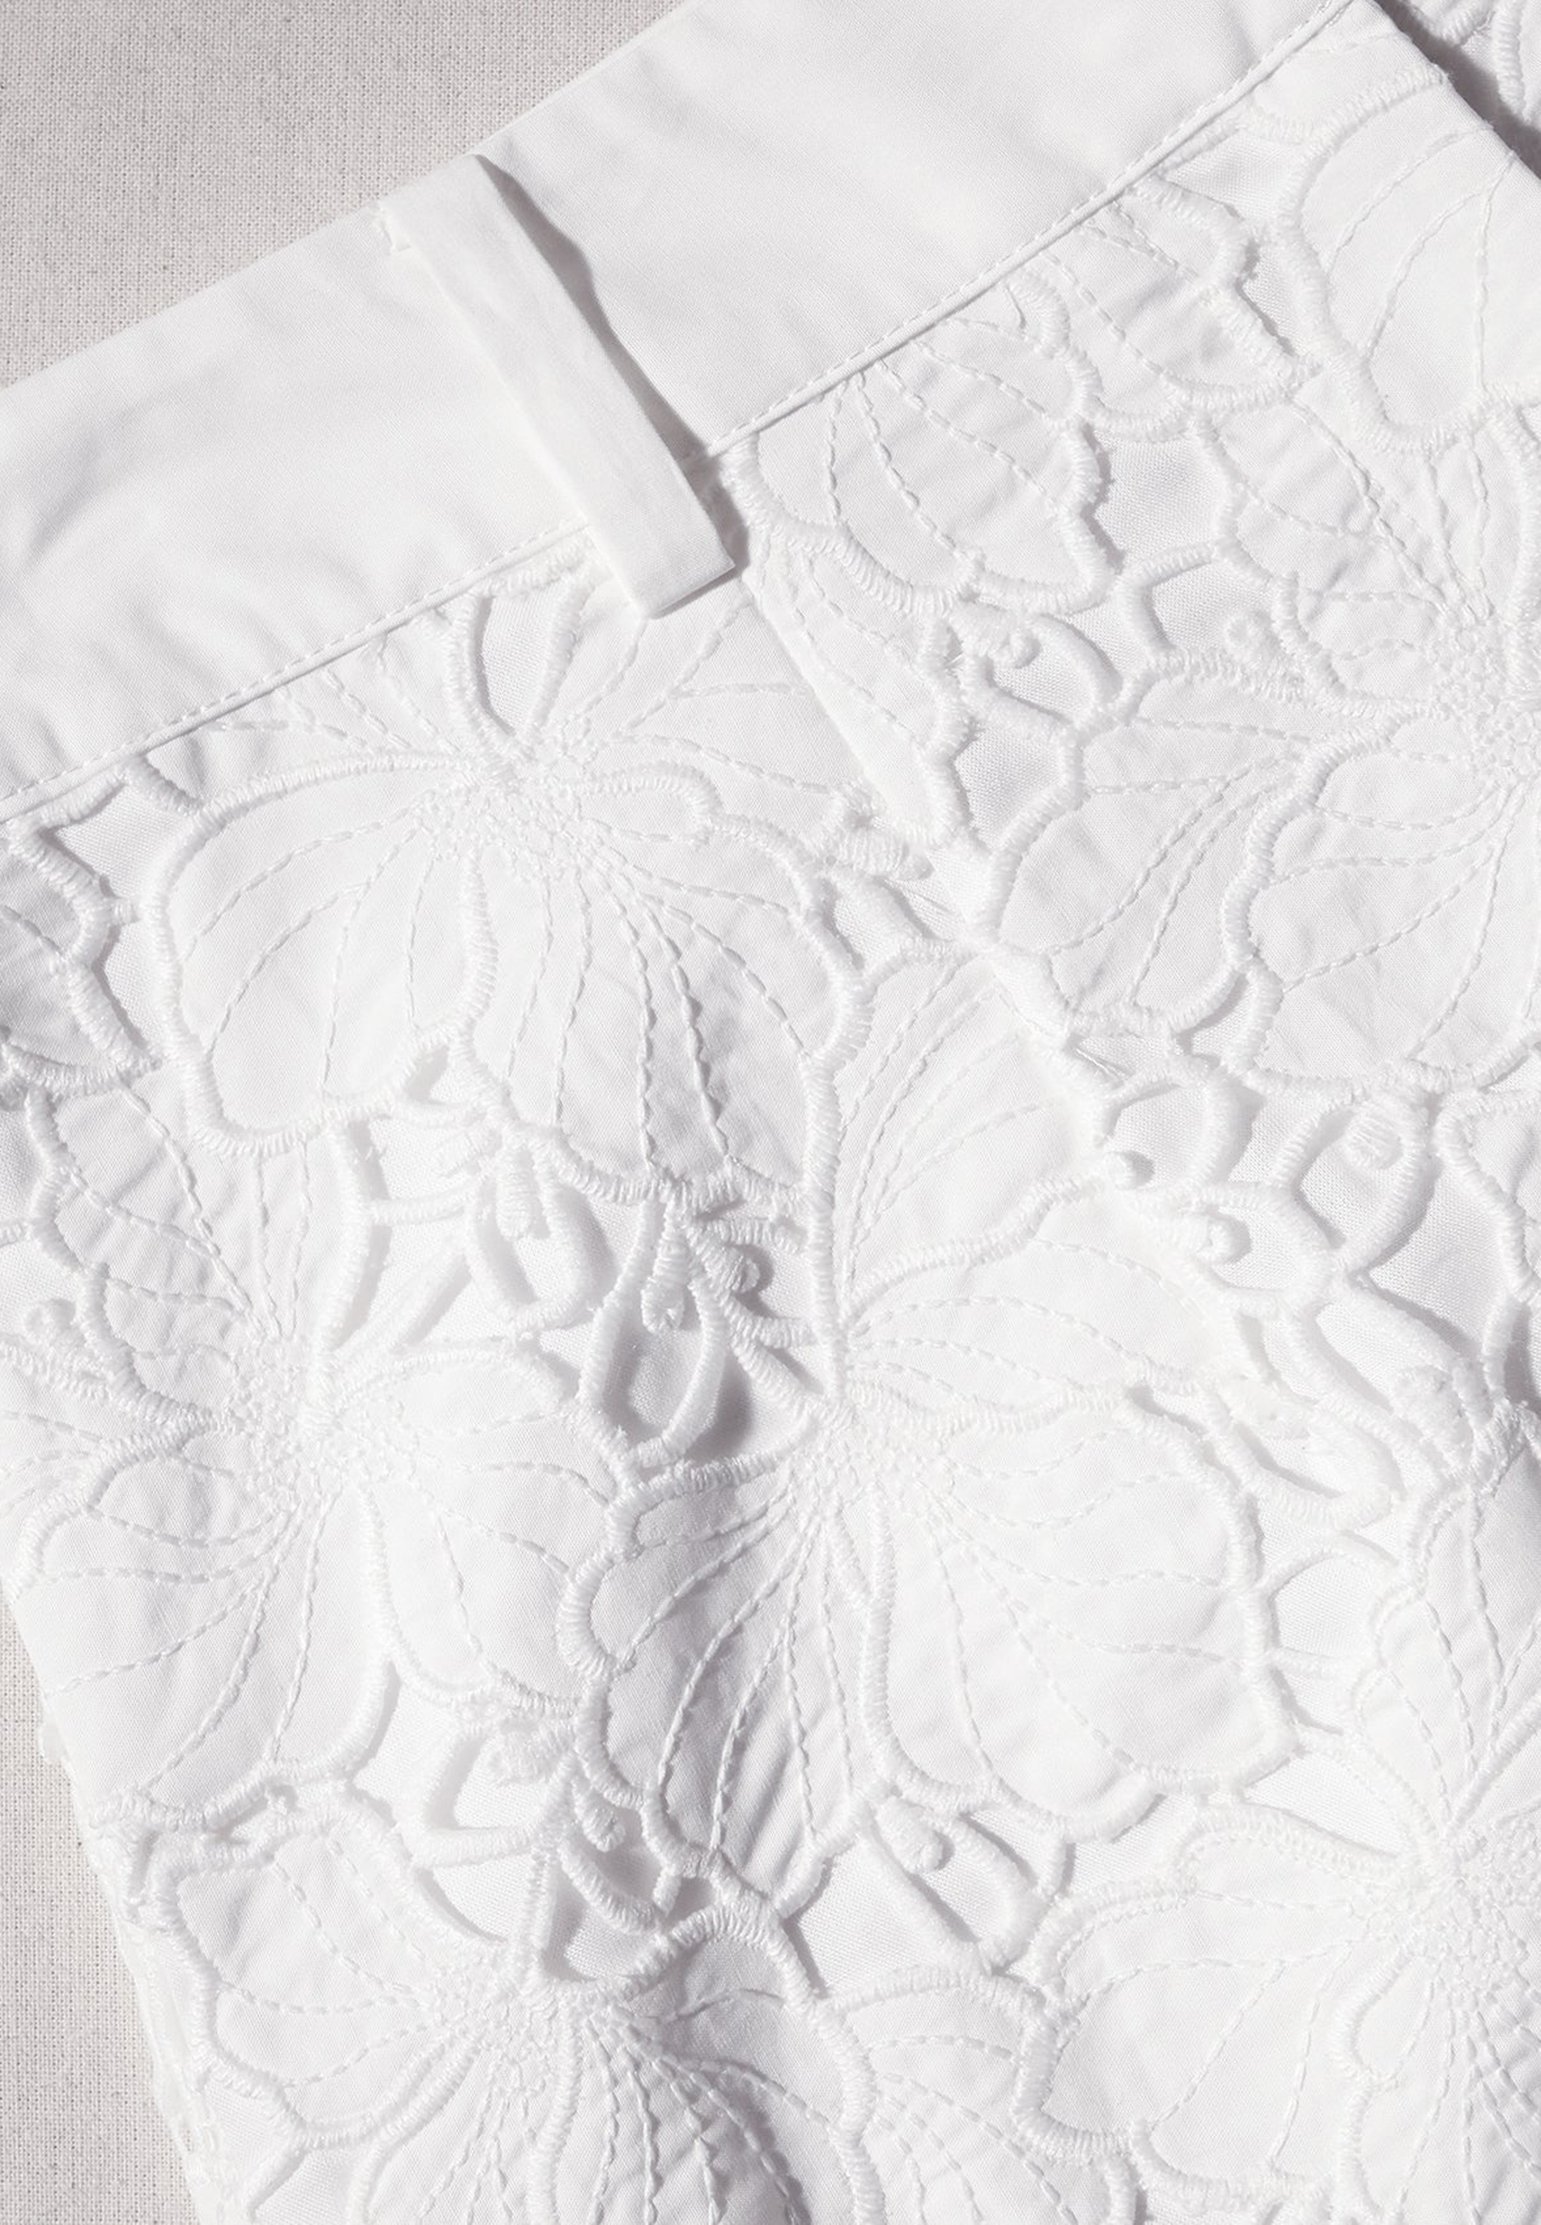 Shorts SELF-PORTRAIT Color: white (Code: 1772) in online store Allure